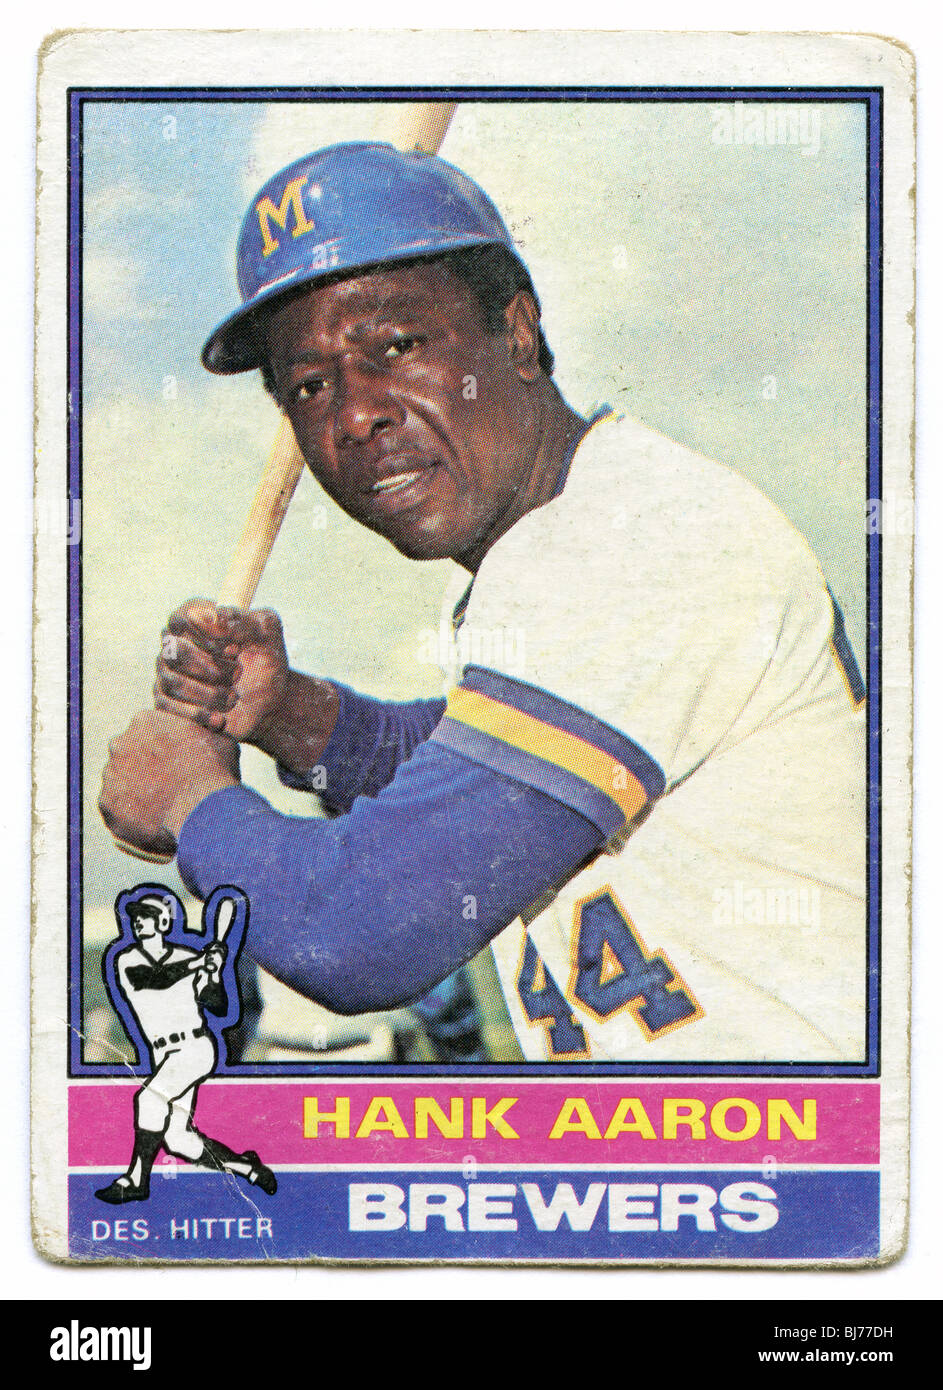 Download Hank Aaron With Brewers Teammates Wallpaper